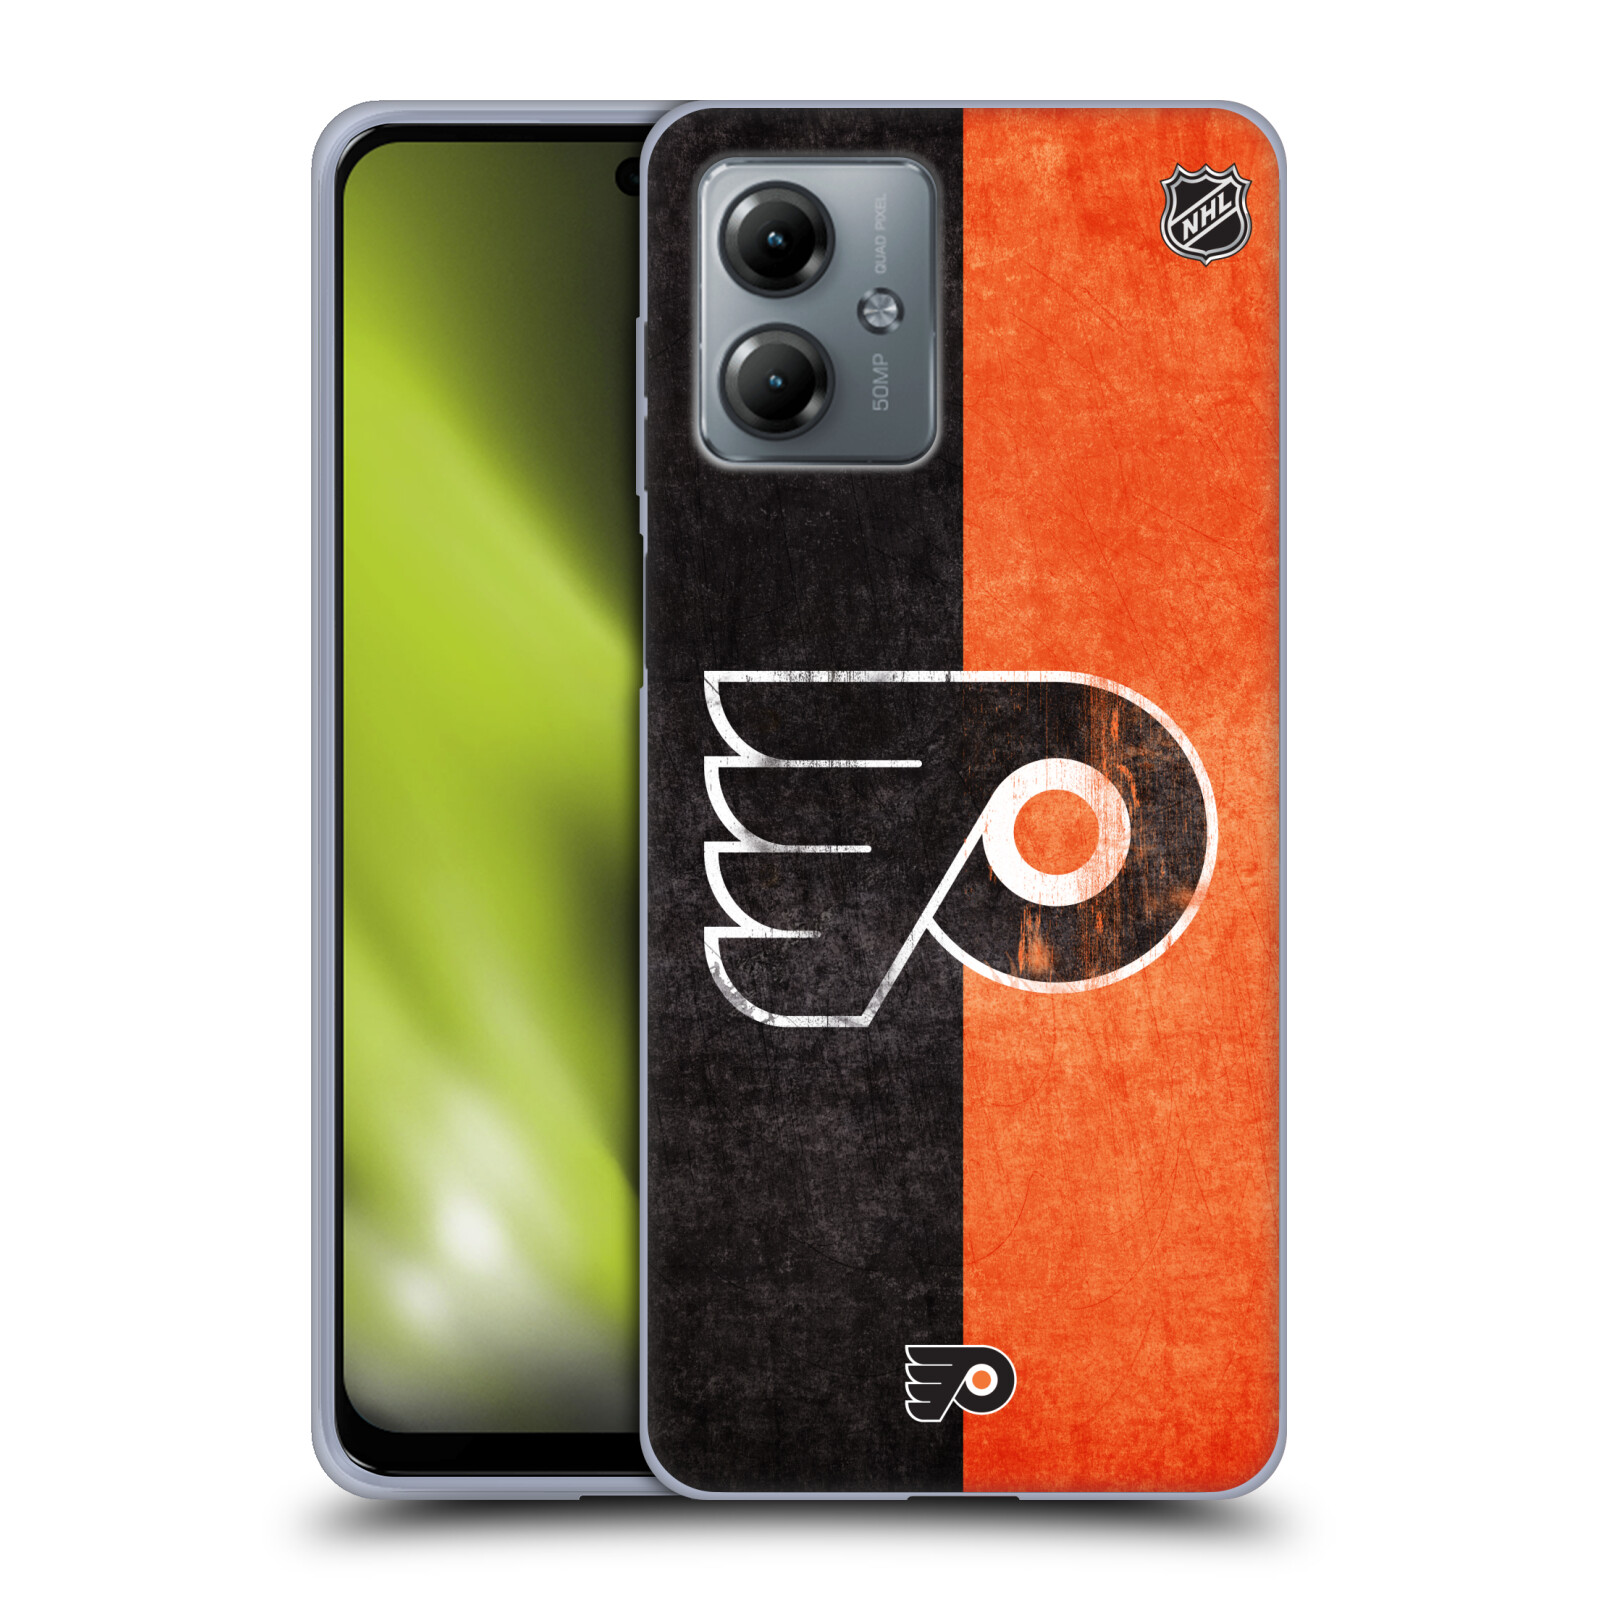 Silikonové pouzdro na mobil Motorola Moto G14 - NHL - Půlené logo Philadelphia Flyers (Silikonový kryt, obal, pouzdro na mobilní telefon Motorola Moto G14 s licencovaným motivem NHL - Půlené logo Philadelphia Flyers)